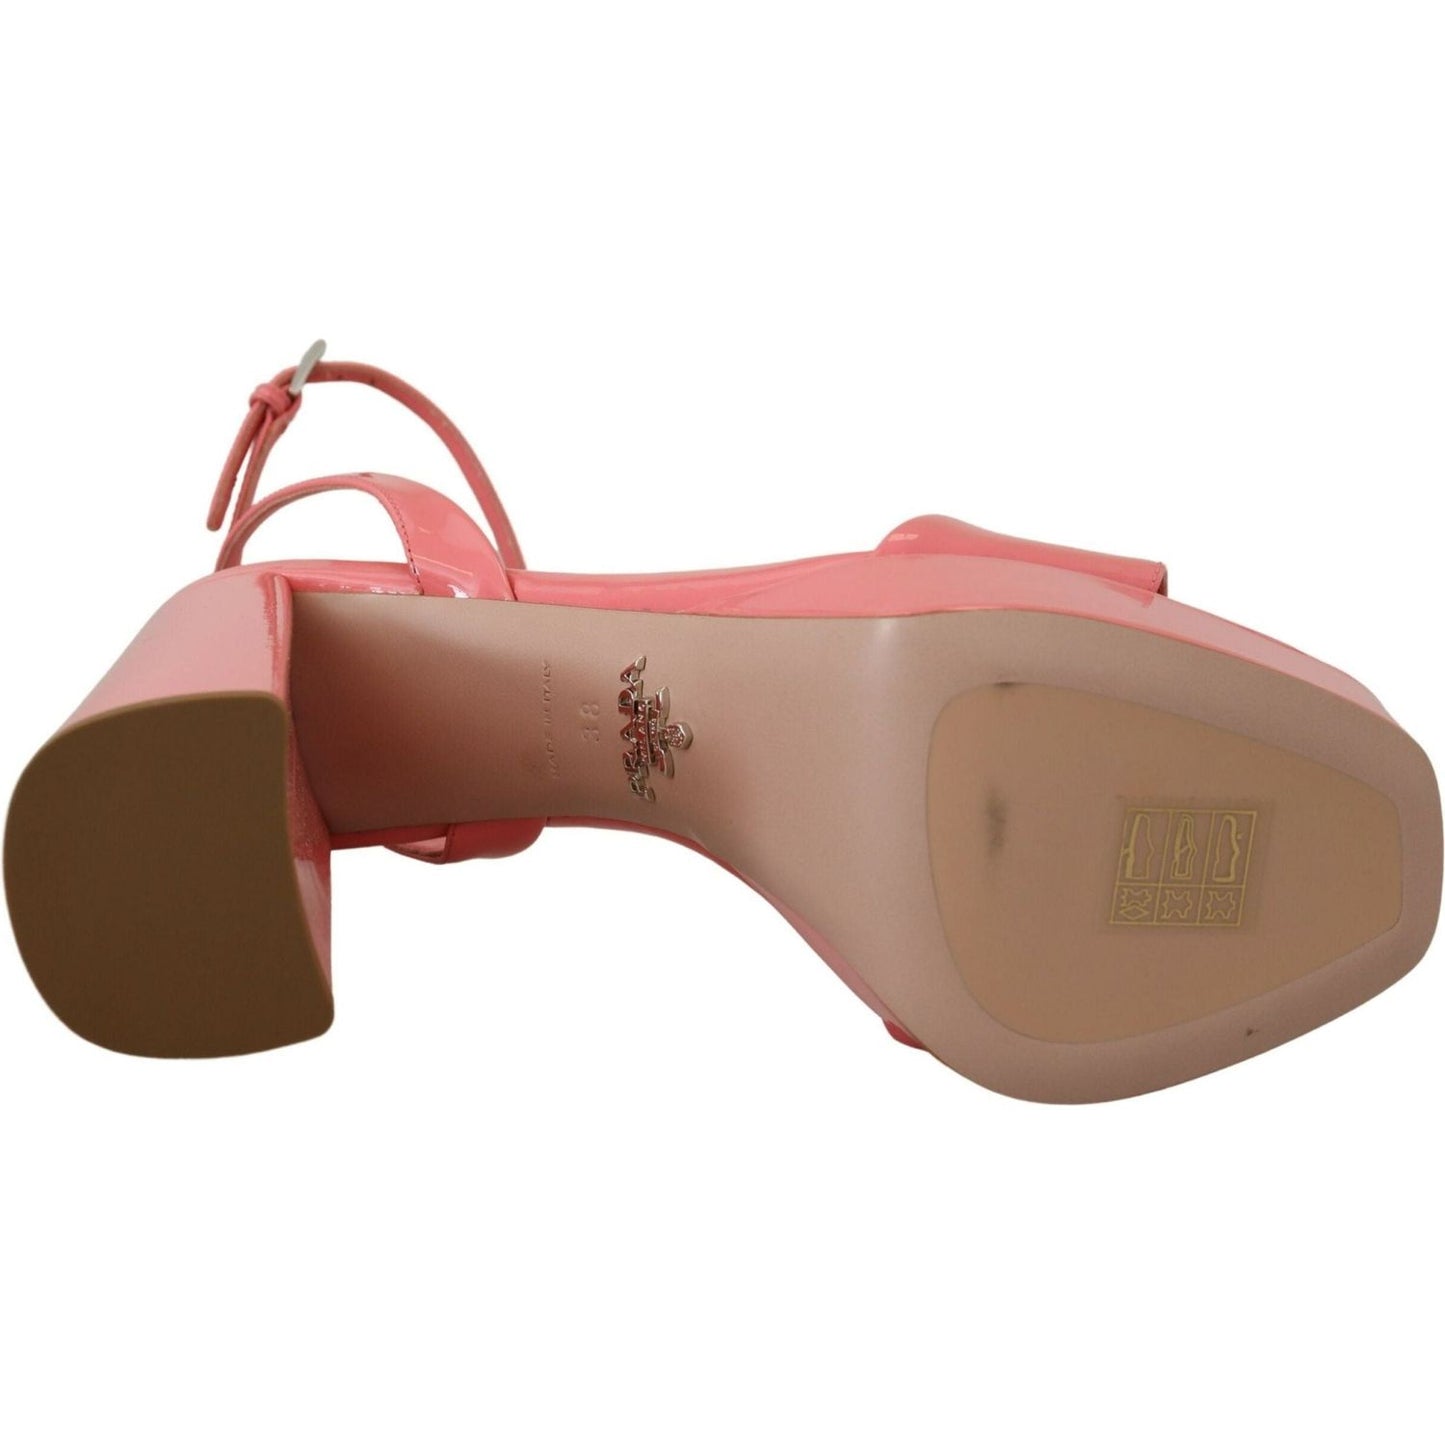 Prada Chic Pink Patent Leather Platform Sandals pink-patent-sandals-ankle-strap-heels-sandal IMG_8342-scaled-1b047009-699.jpg